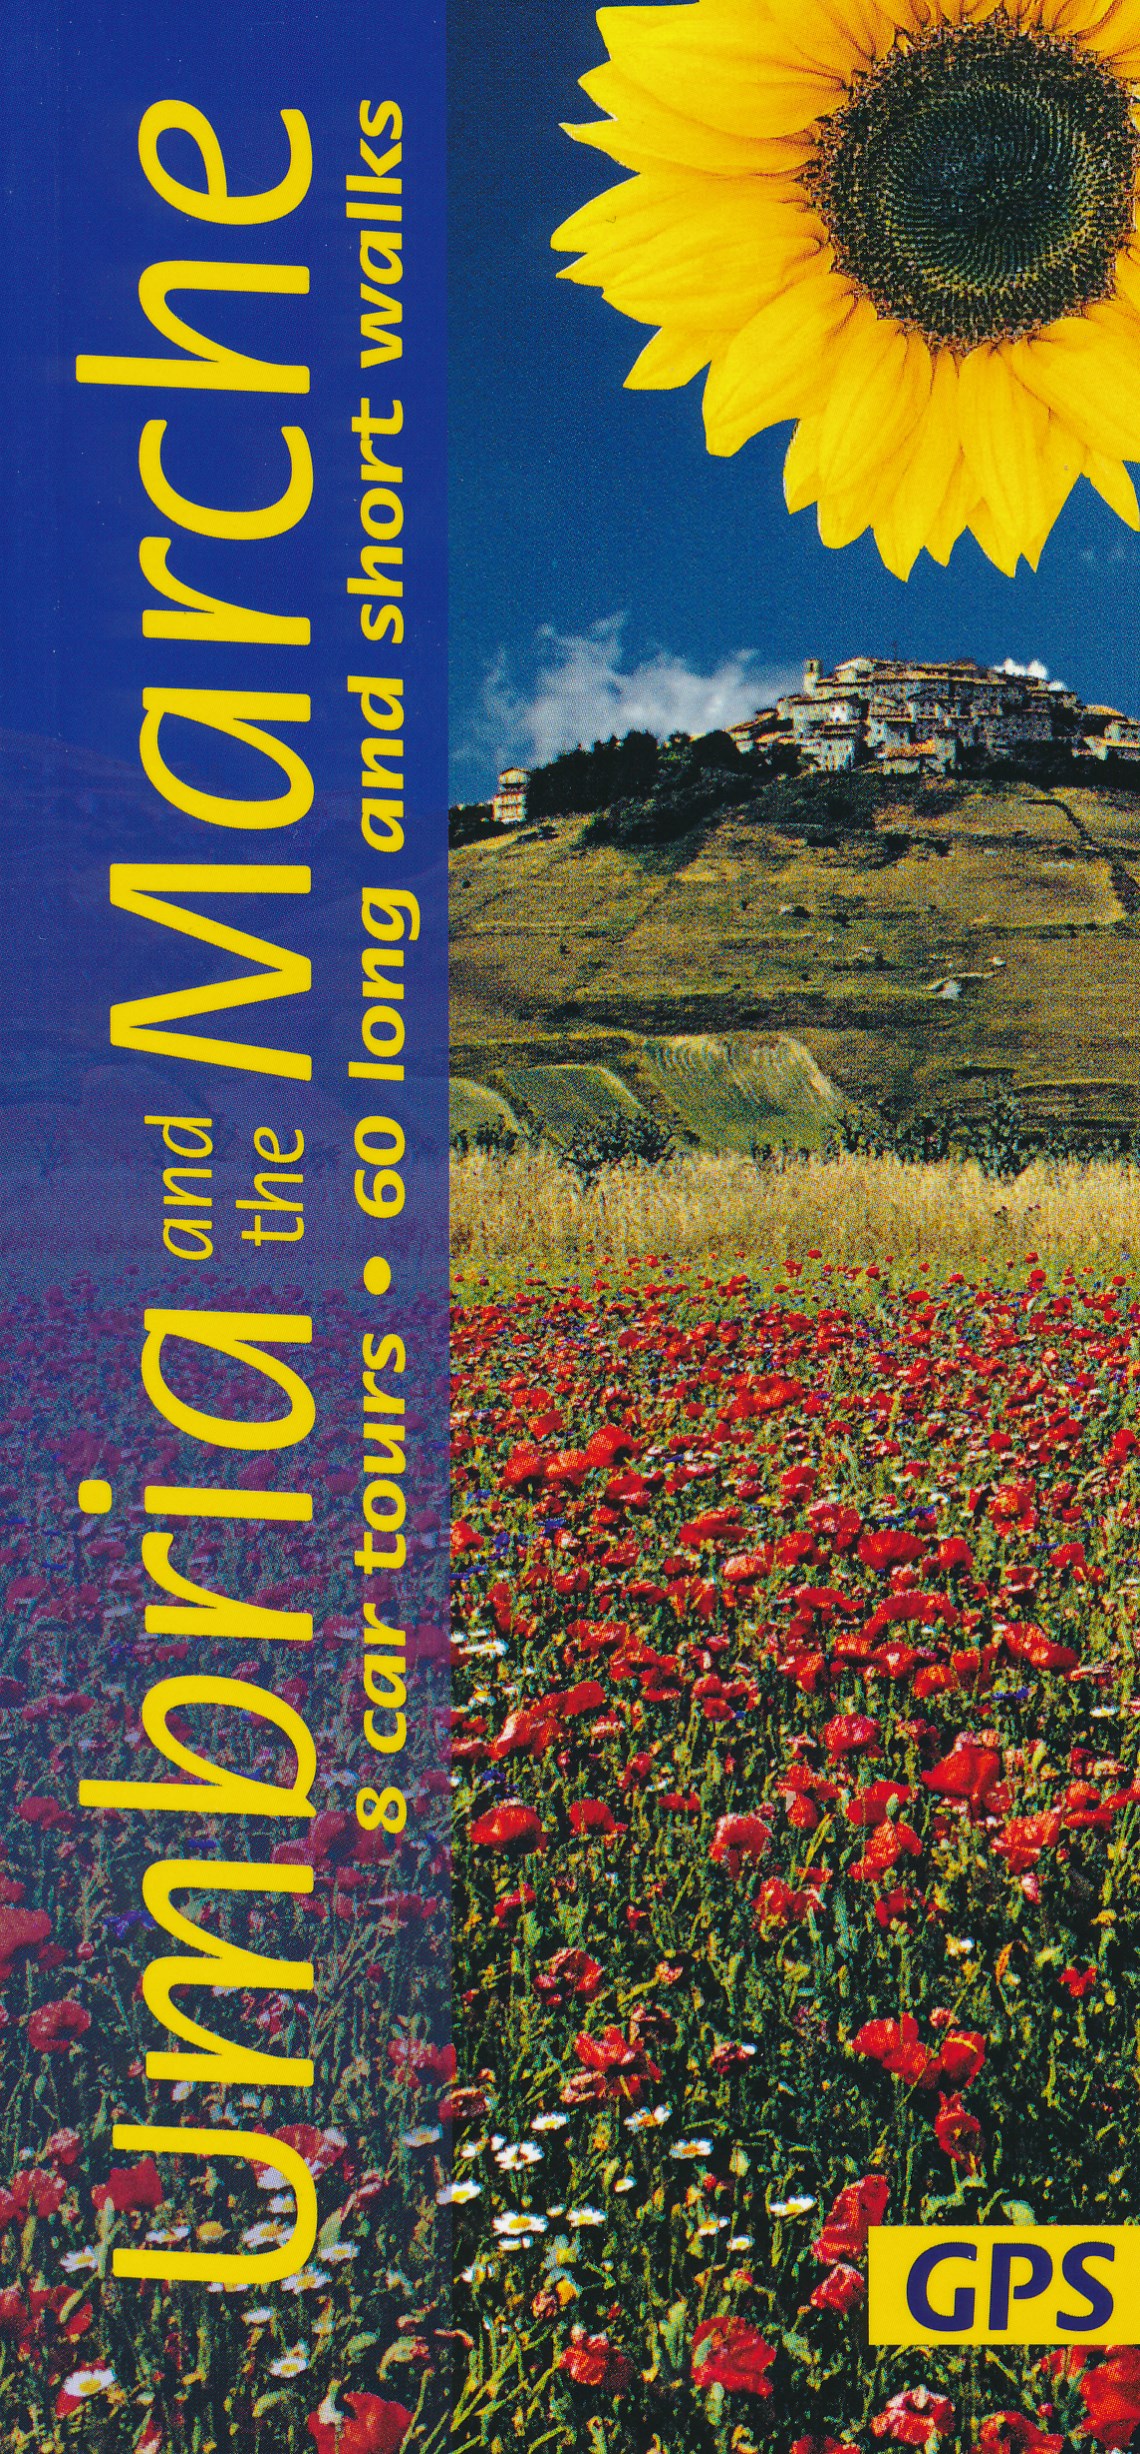 Online bestellen: Wandelgids Umbria & The Marche | Sunflower books